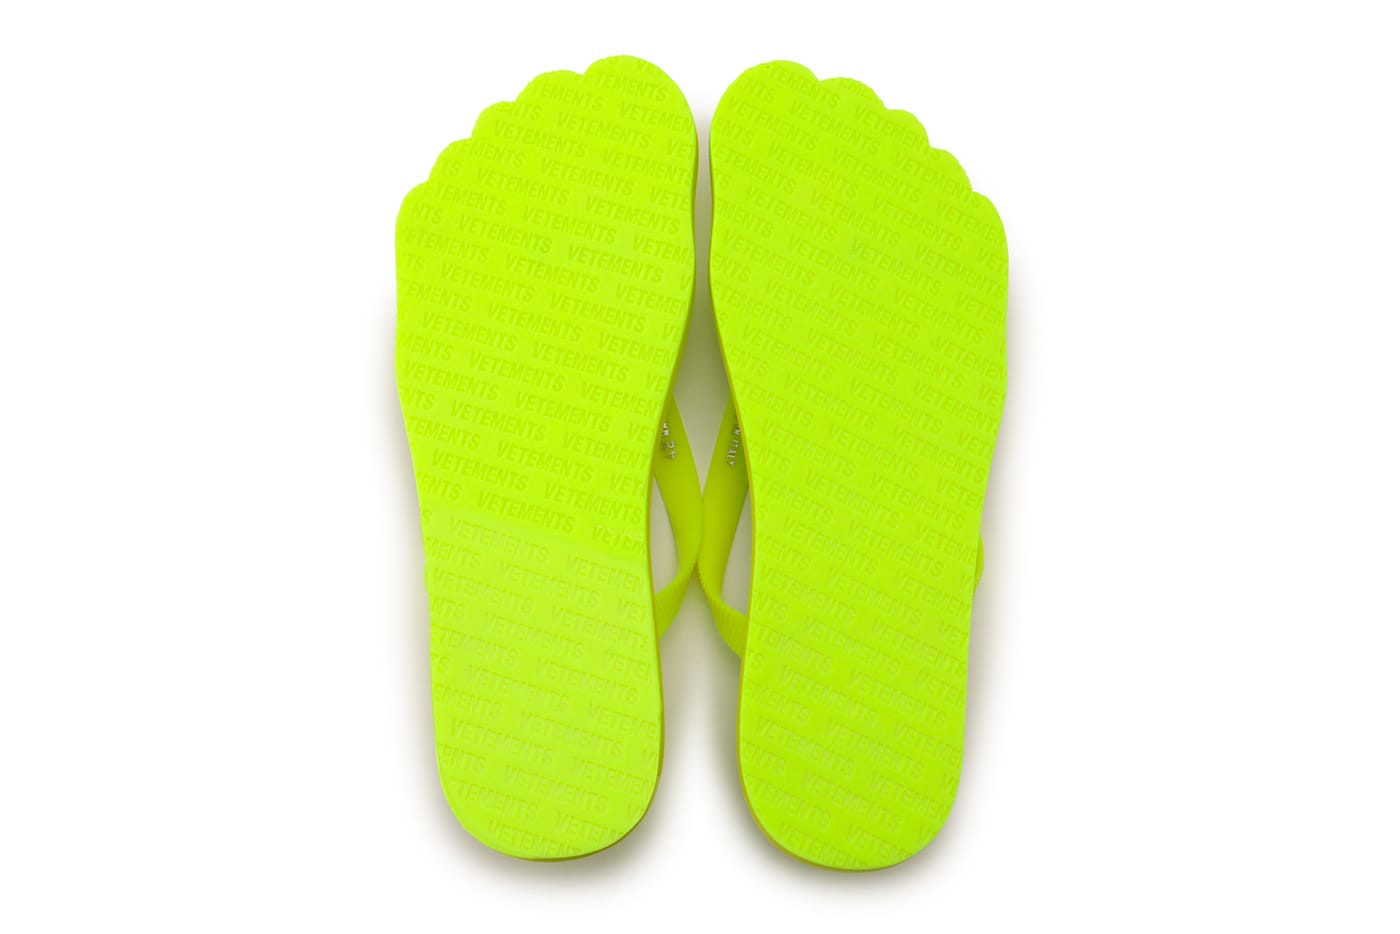 Vetements Neon-Yellow Anatomic Flip Flops Release | HYPEBEAST